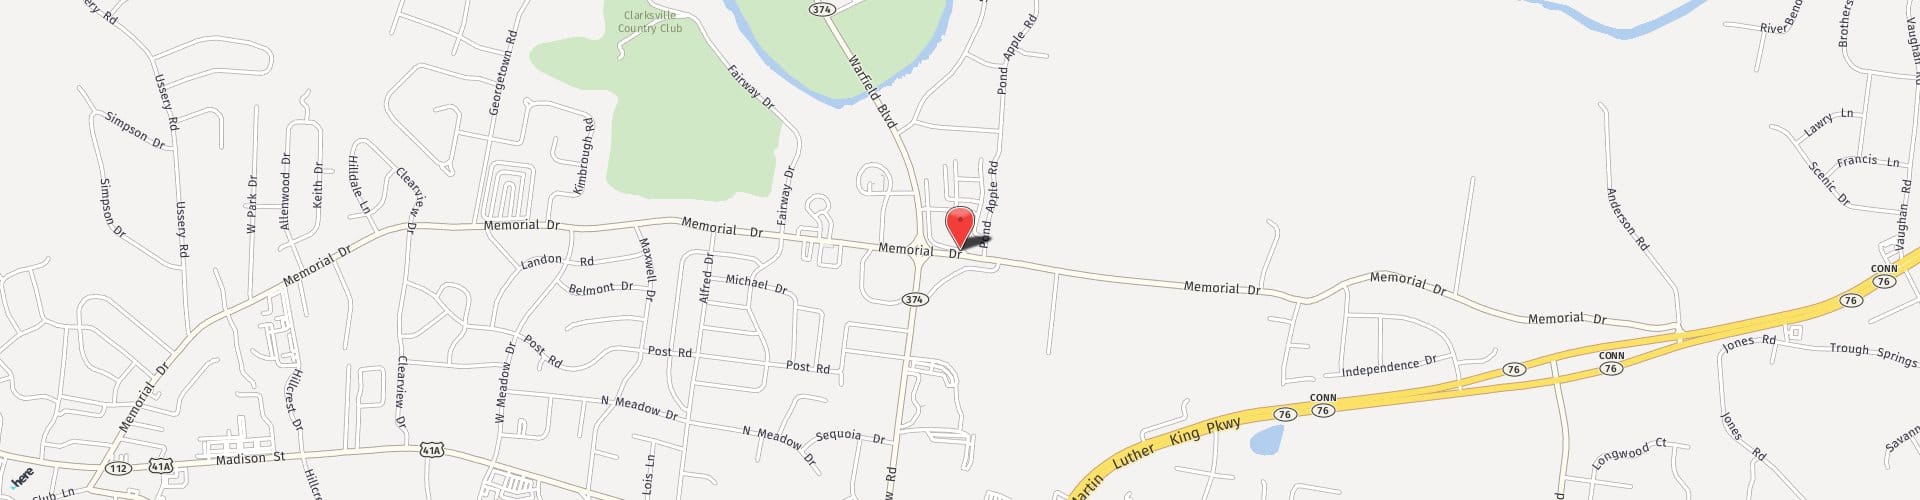 Location Map: 2313 Rudolphtown Rd. Clarksville, TN 37043